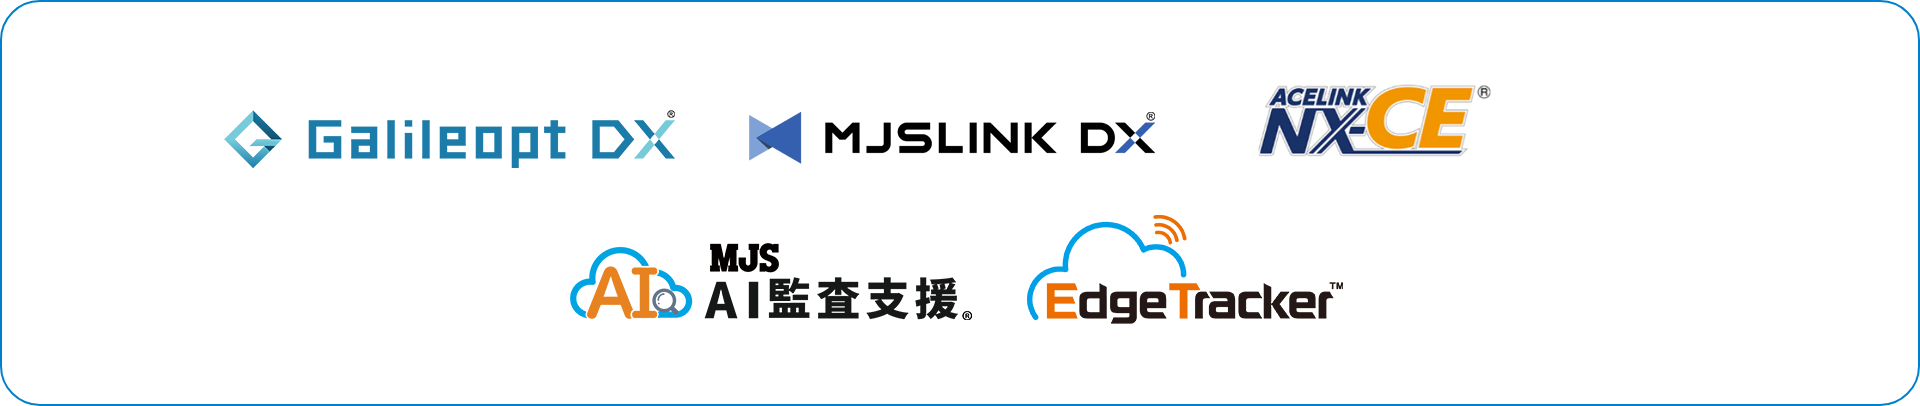 Galileopt DX / MJSLINK DX / ACELINK NX-CE / MJS AI監査支援 / Edge Tracker